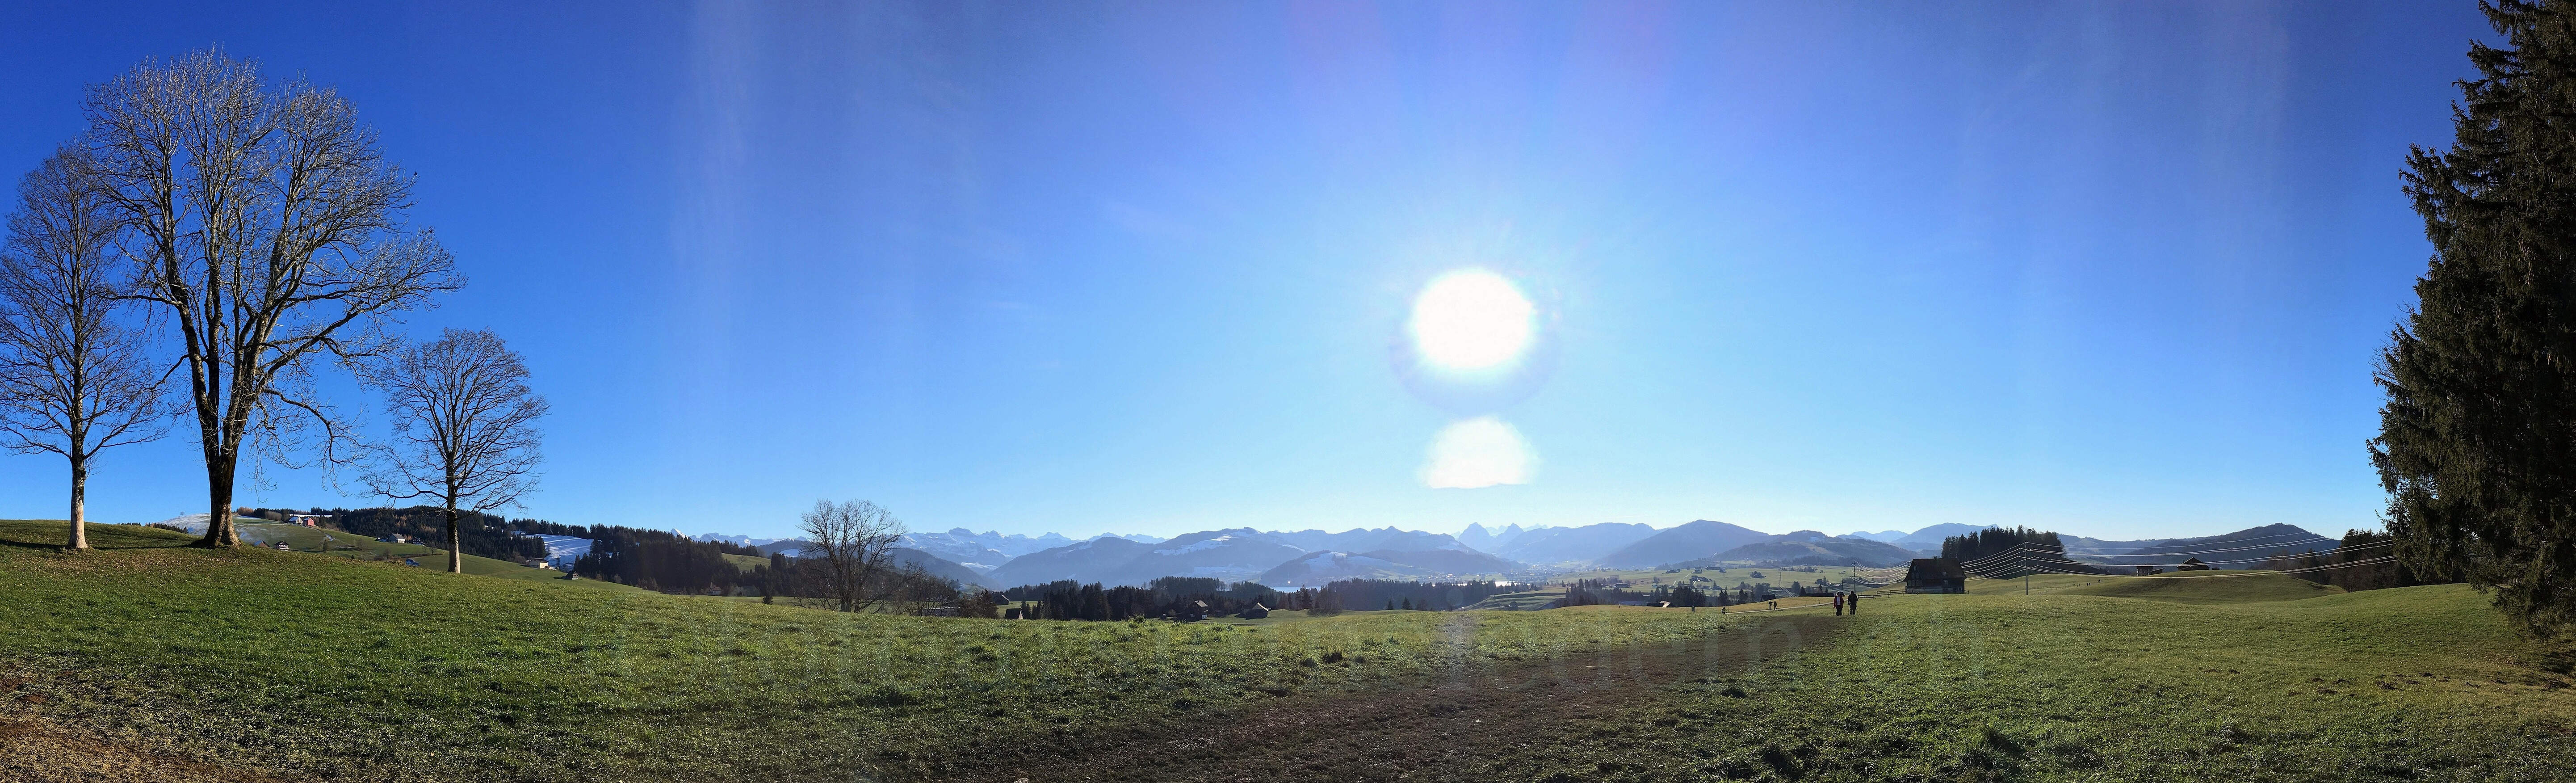 Panorama Einsiedeln 2020 033